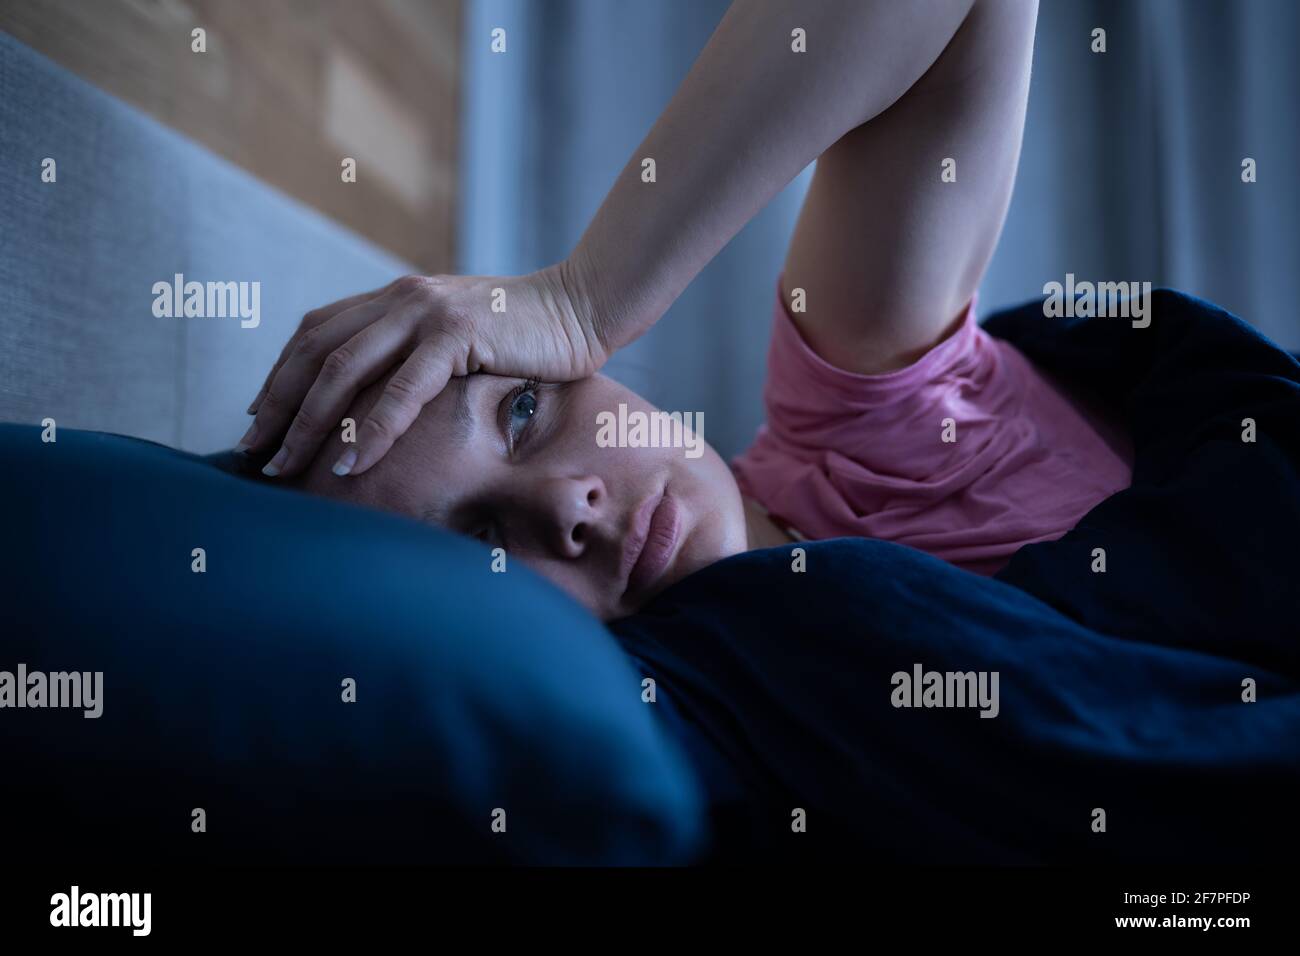 Awake Woman With Insomnia In Bed. Disturbed Sleep Stock Photo